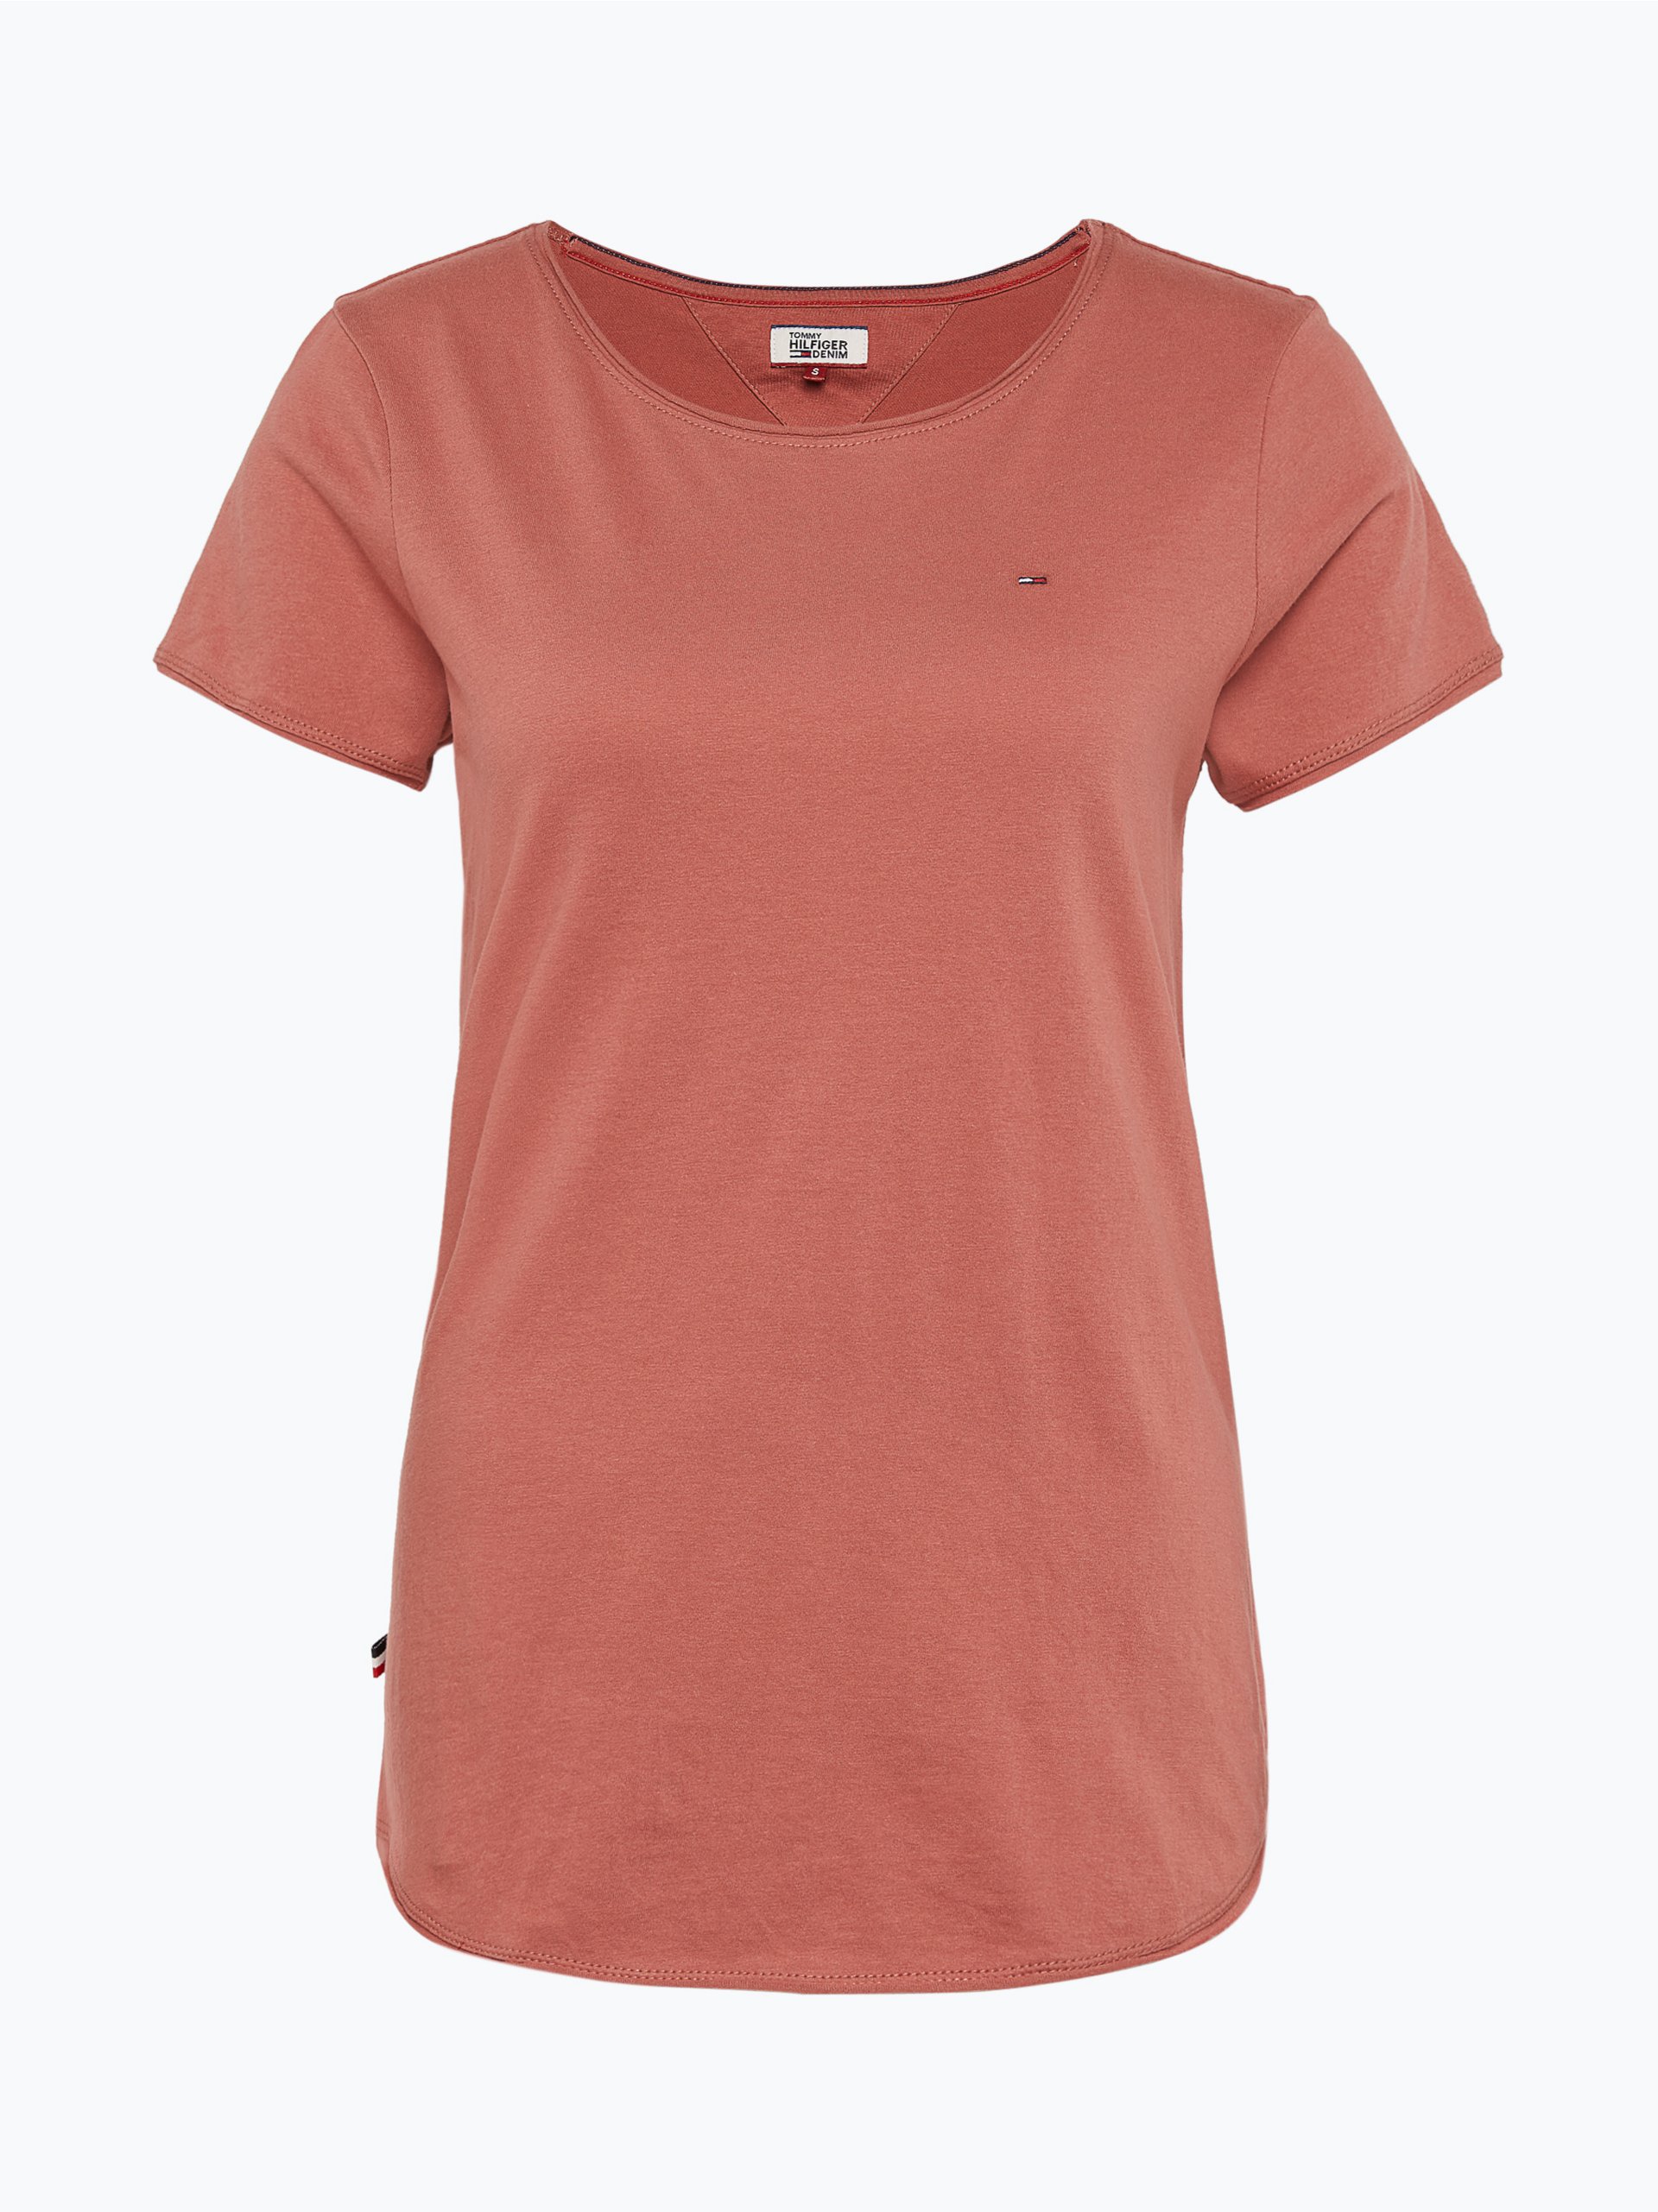 Hilfiger Denim Damen T-Shirt rosa uni online kaufen | PEEK ...